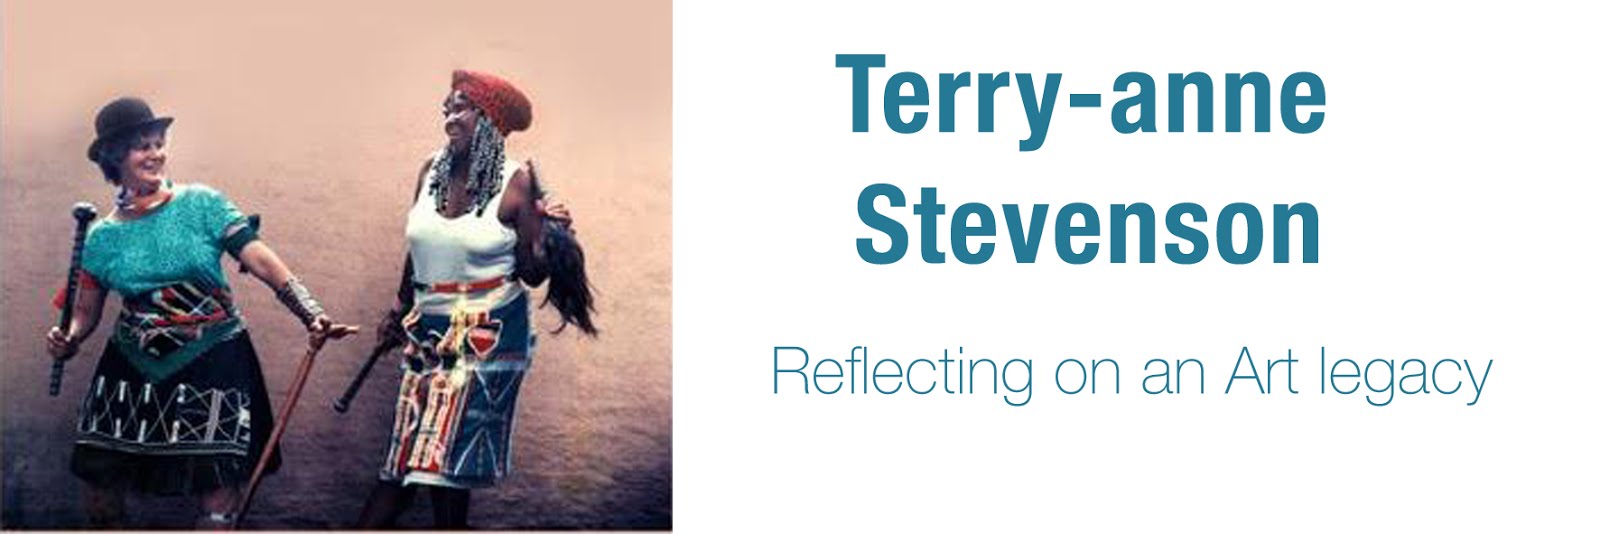 Terry-anne Stevenson: Reflecting on an Art legacy